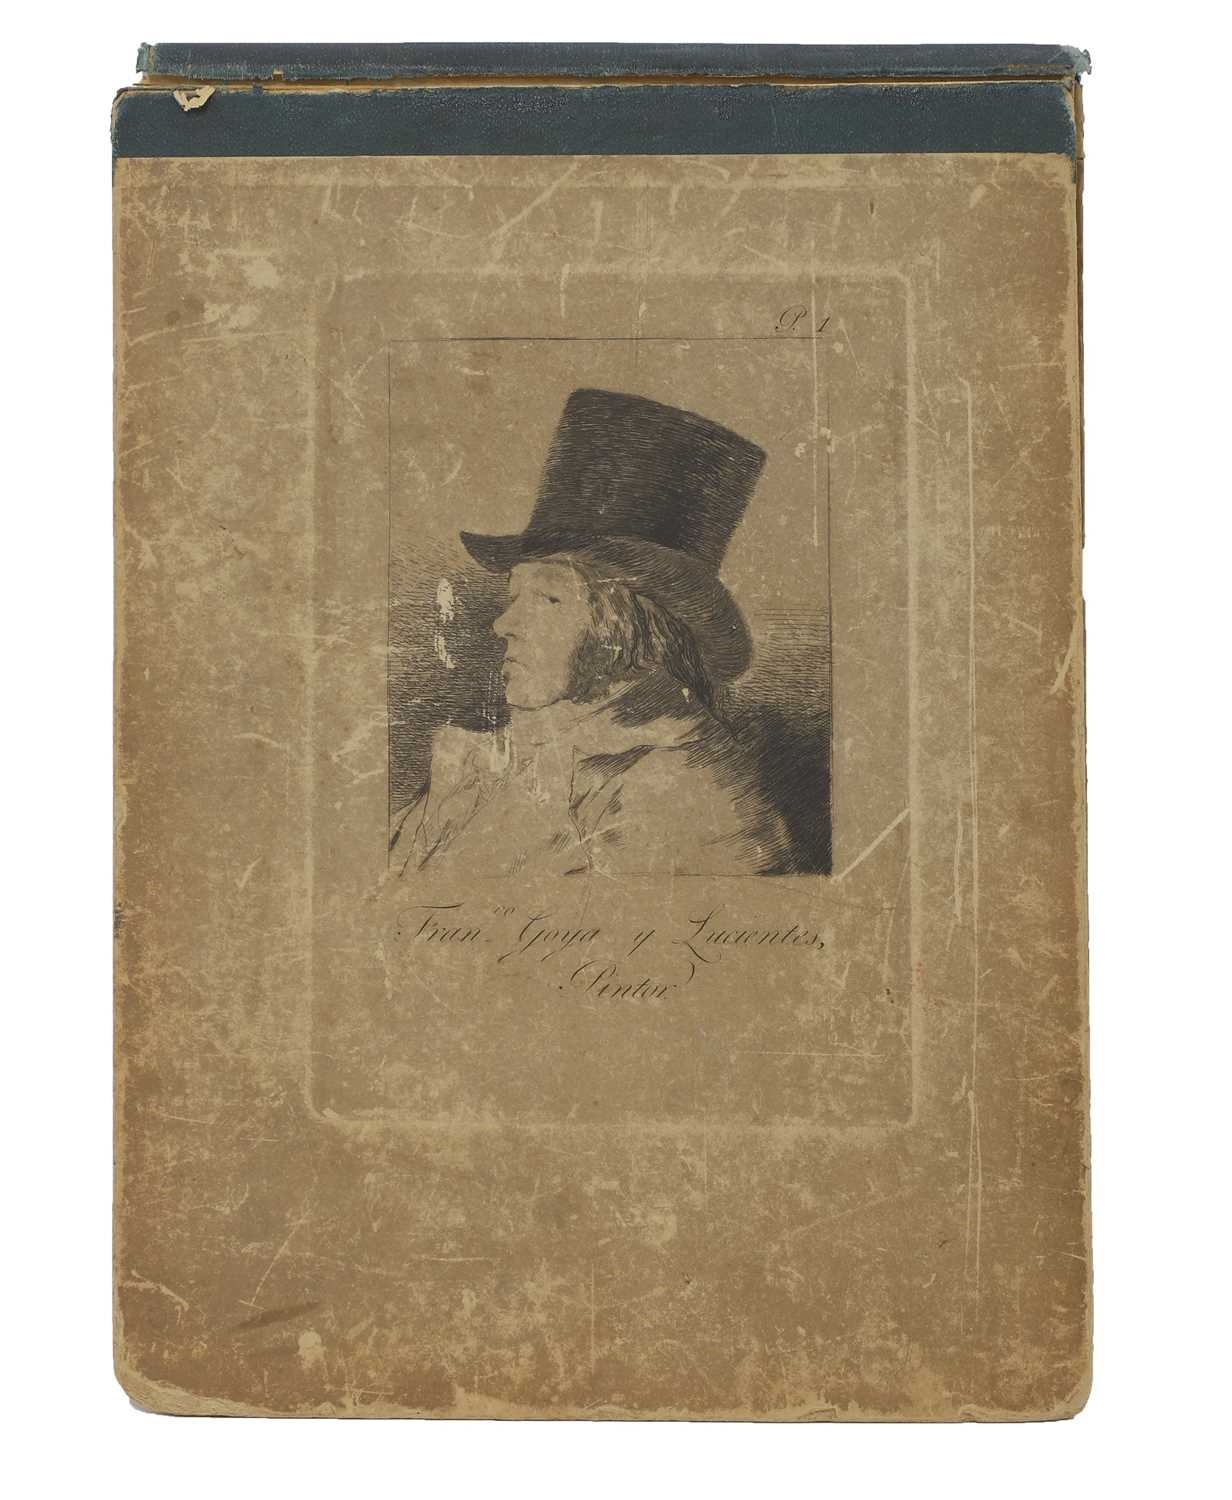 Calcografia' on the verso. Oblong 4to (240 x 330mm - Francisco José de Goya y Lucientes